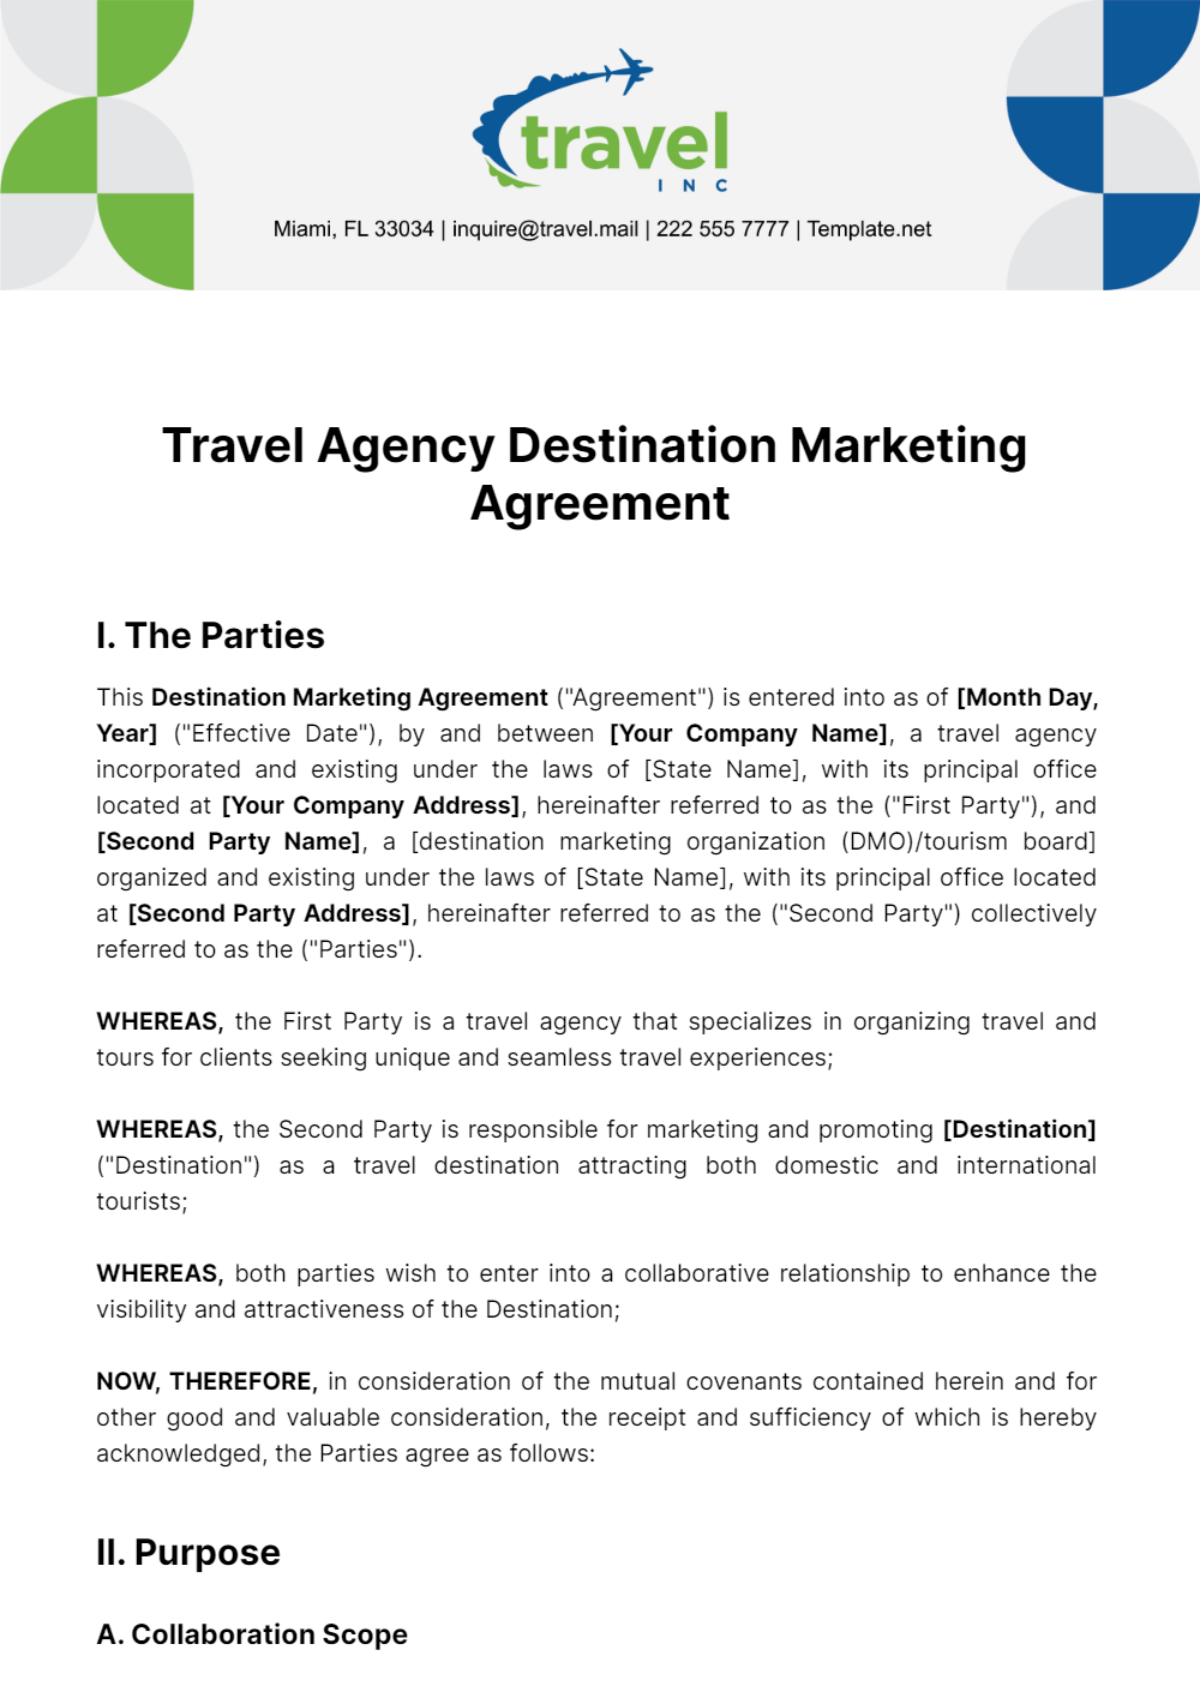 Travel Agency Destination Marketing Agreement Template